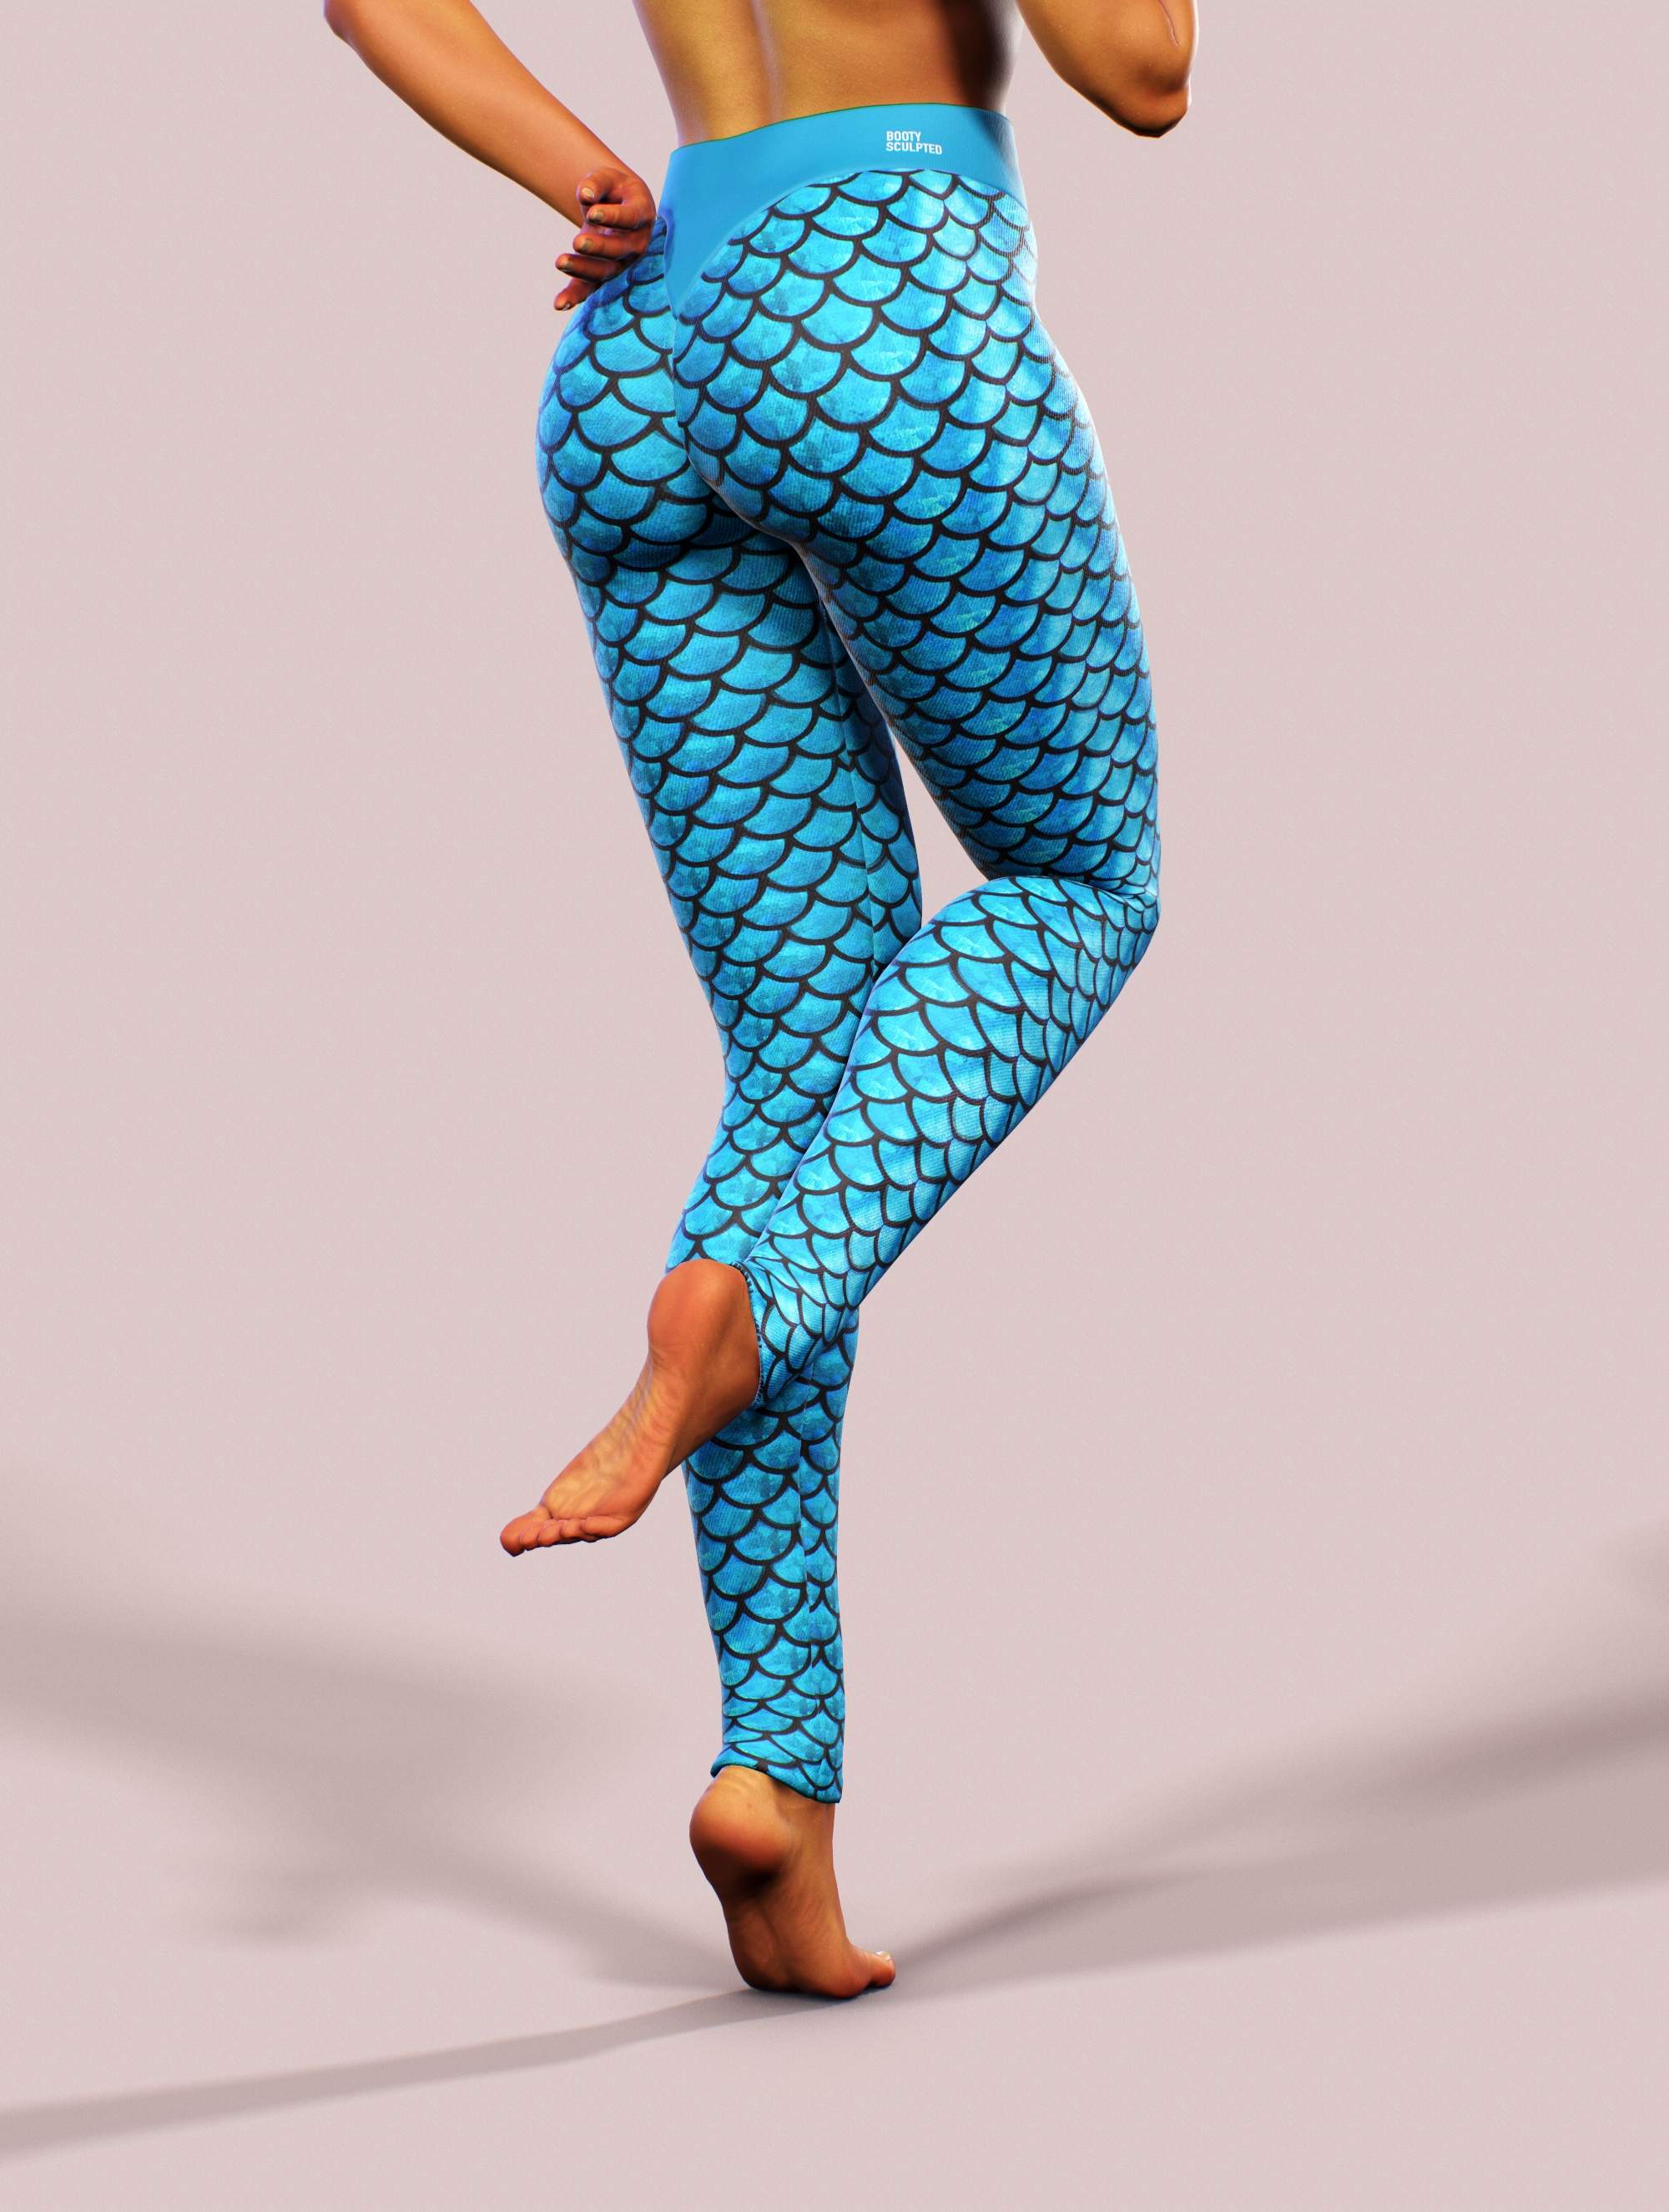 Mermaid Plus Size Yoga Leggings, Scale Print, Ombre, Blue, Purple, Aqua,  Beach, Fitness, Yoga, or for Fun 2x 3x 4x 5x 6x -  Canada